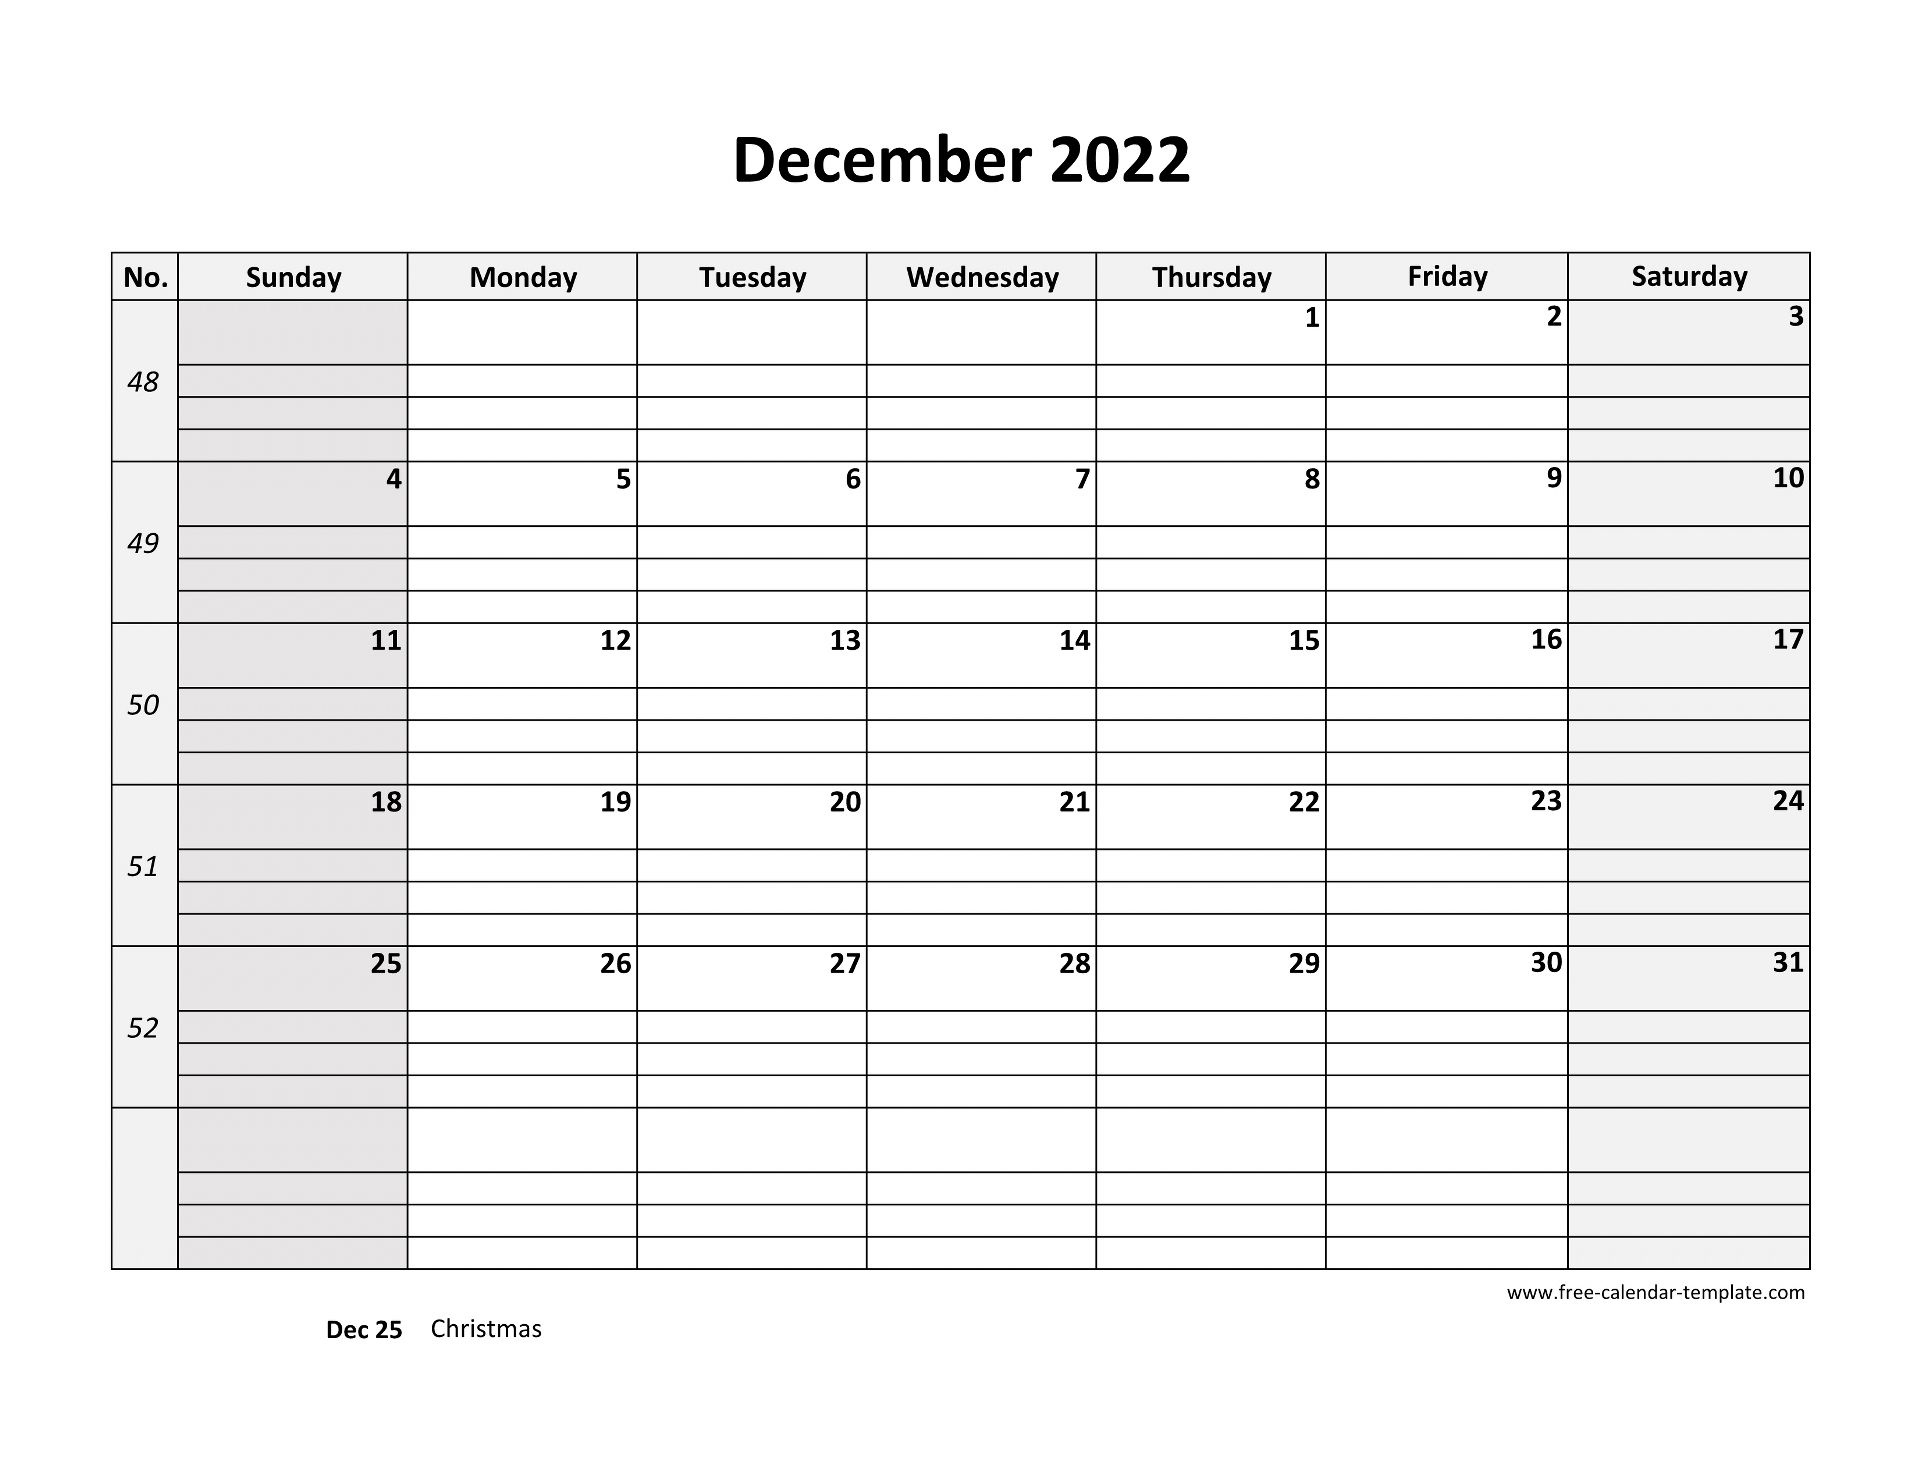 December 2022 Free Calendar Tempplate | Free-Calendar December 2022 Calendar Free Printable